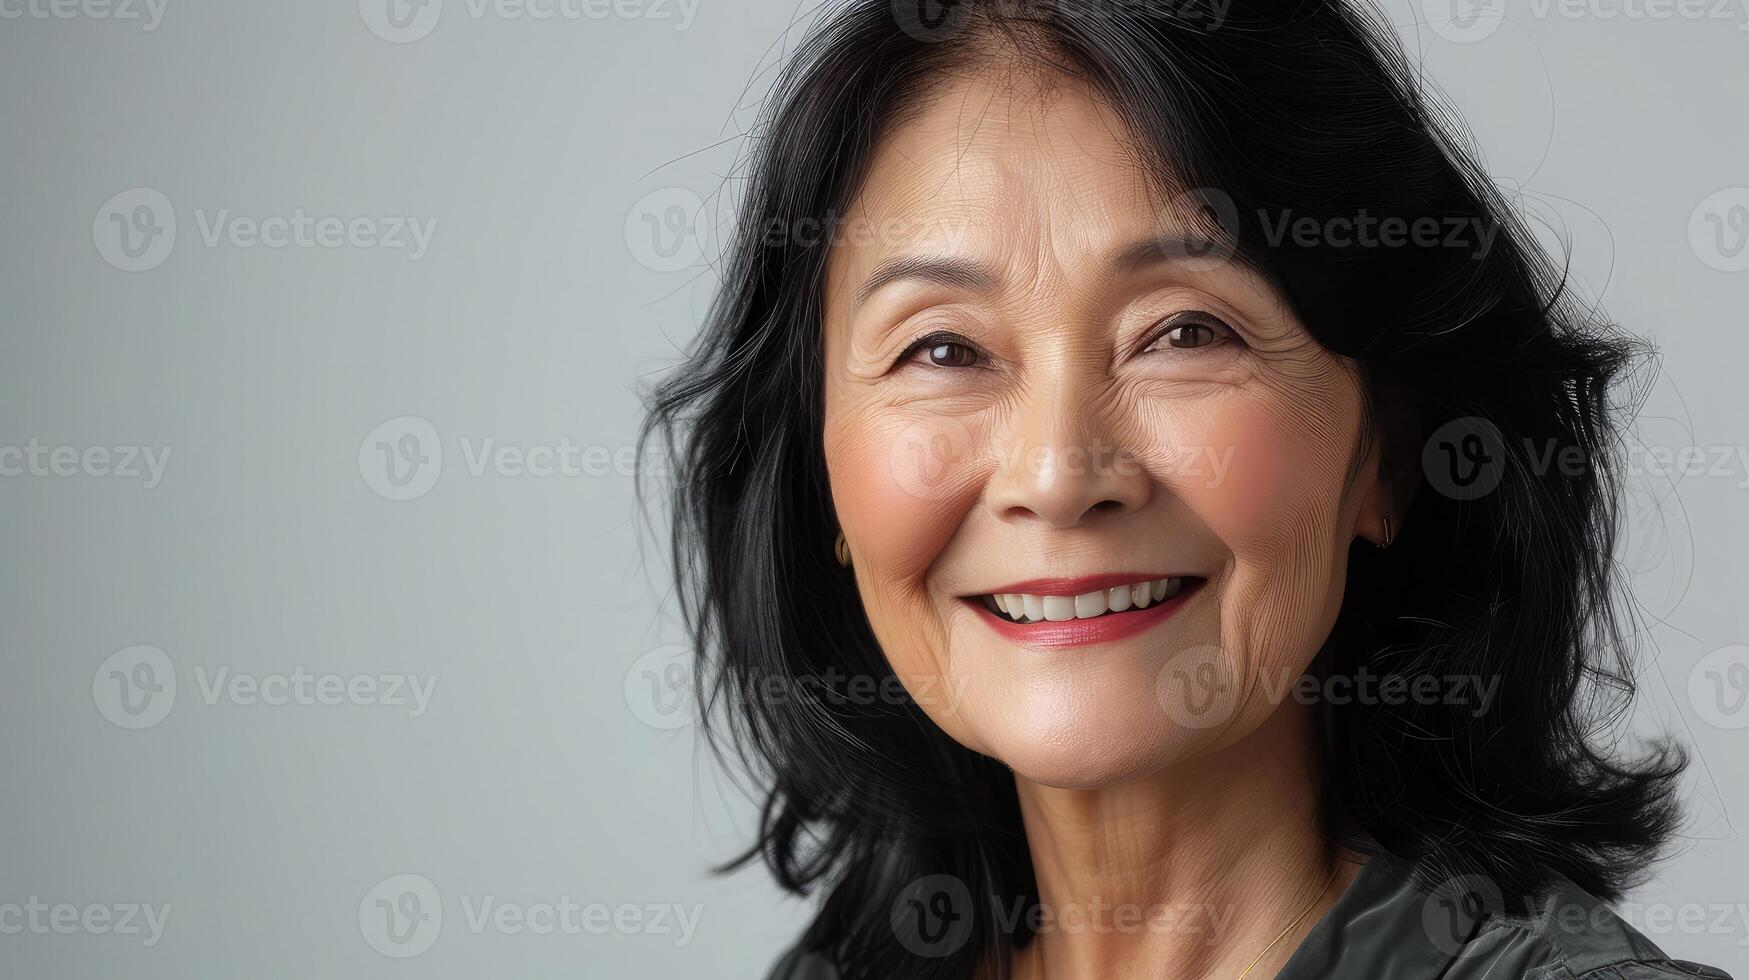 ai gegenereerd mooi volwassen Aziatisch vrouw glimlacht breed in studio. Rechtsaf kant ton afgesloten portret. wit achtergrond. foto